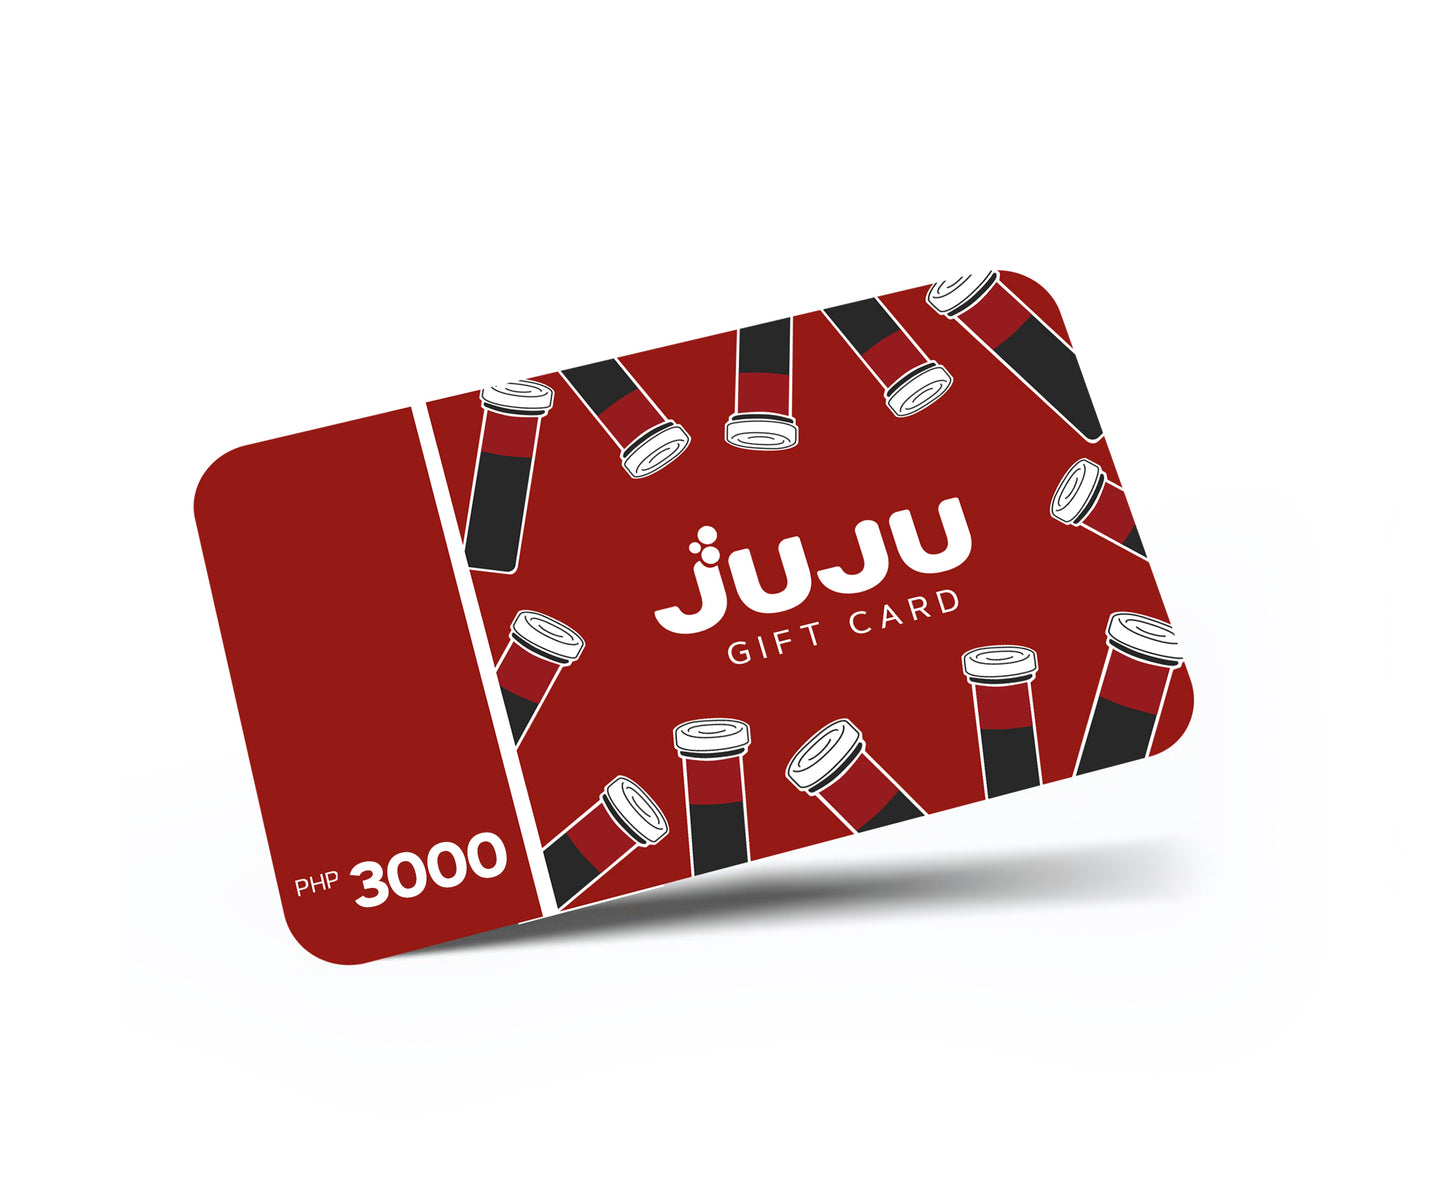 JUJU HOLIDAY GIFT CARD